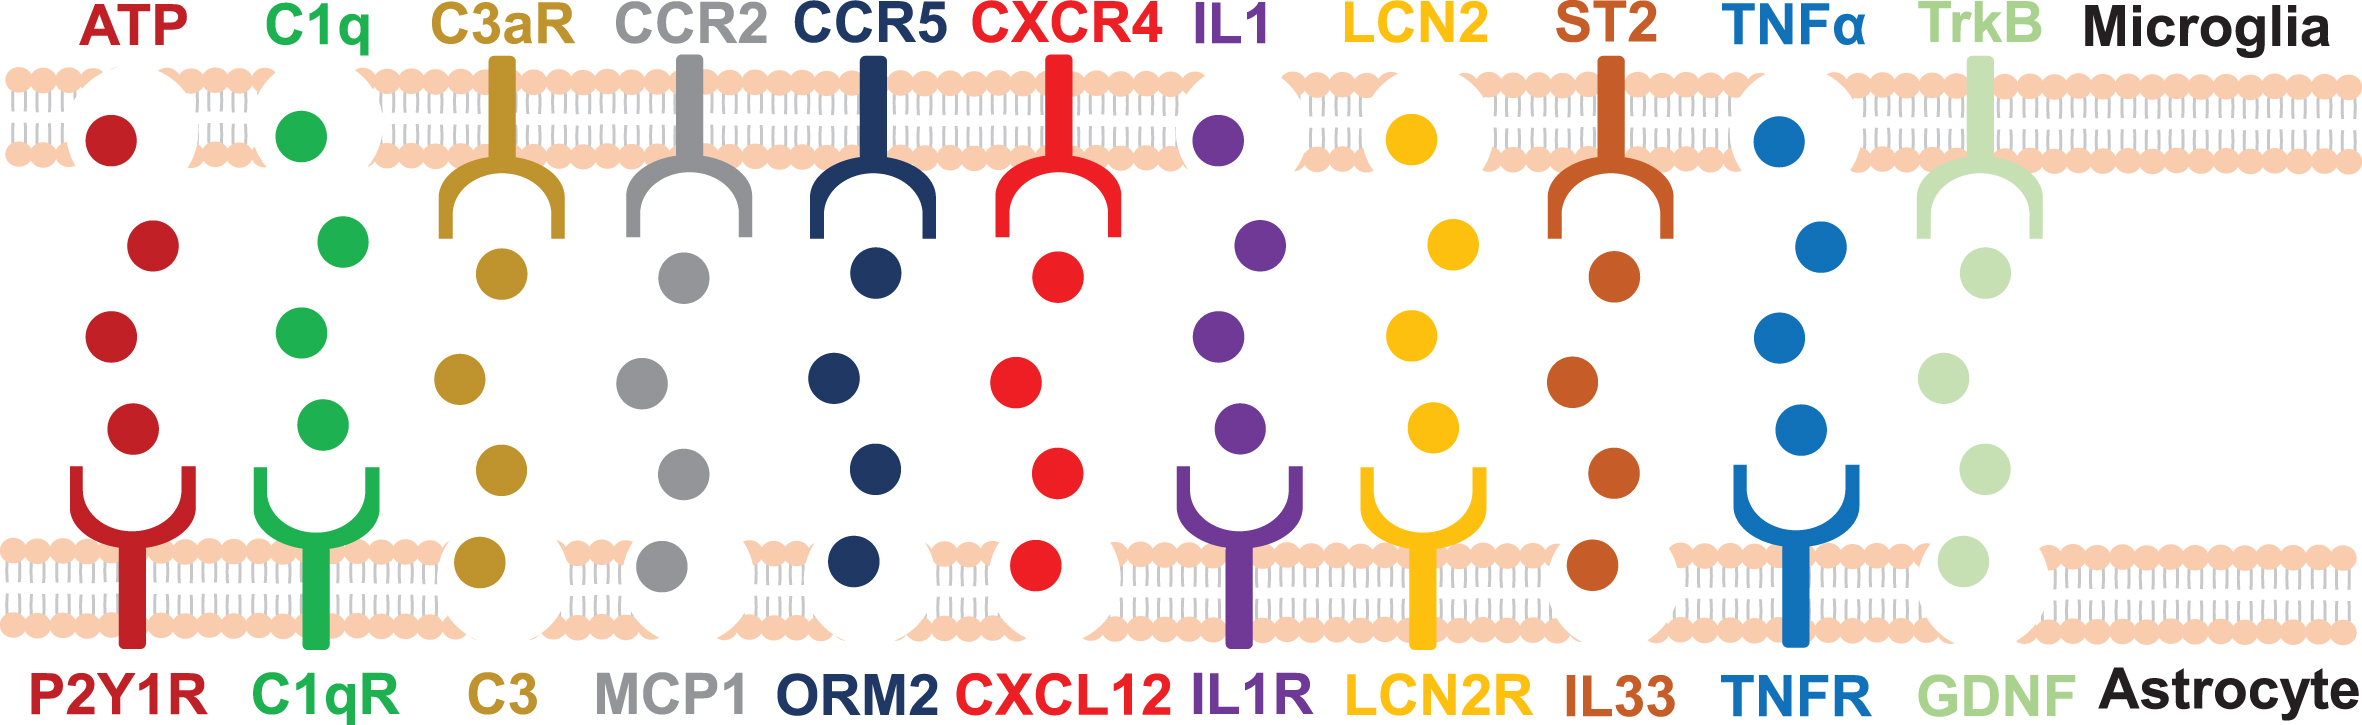 Molecular conversation between microglia and astrocytes. The signaling pathway between microglia and astrocytes is listed here briefly (modified from Li et al. [215]). ATP, Adenosine triphosphate; C1q, Complement component 1q; C1qR, C1q: Complement component 1q receptor; C3aR, C3a receptor; CCR, C-C chemokine receptor; CXCL12, C-X-C motif chemokine ligand 12; CXCR4, C-X-C chemokine receptor type 4; GDNF, Glial cell line-derived neurotrophic factor; IL, Interleukin; LCN2, Lipocalin 2; MCP1, Monocyte chemoattractant protein 1; ORM2, Orosomucoid 2; P2Y, metabotropic; ST2, Suppressor of tumorigenicity 2; TNF, Tumor necrosis factor; TrkB, Tropomyosin-related kinase B.